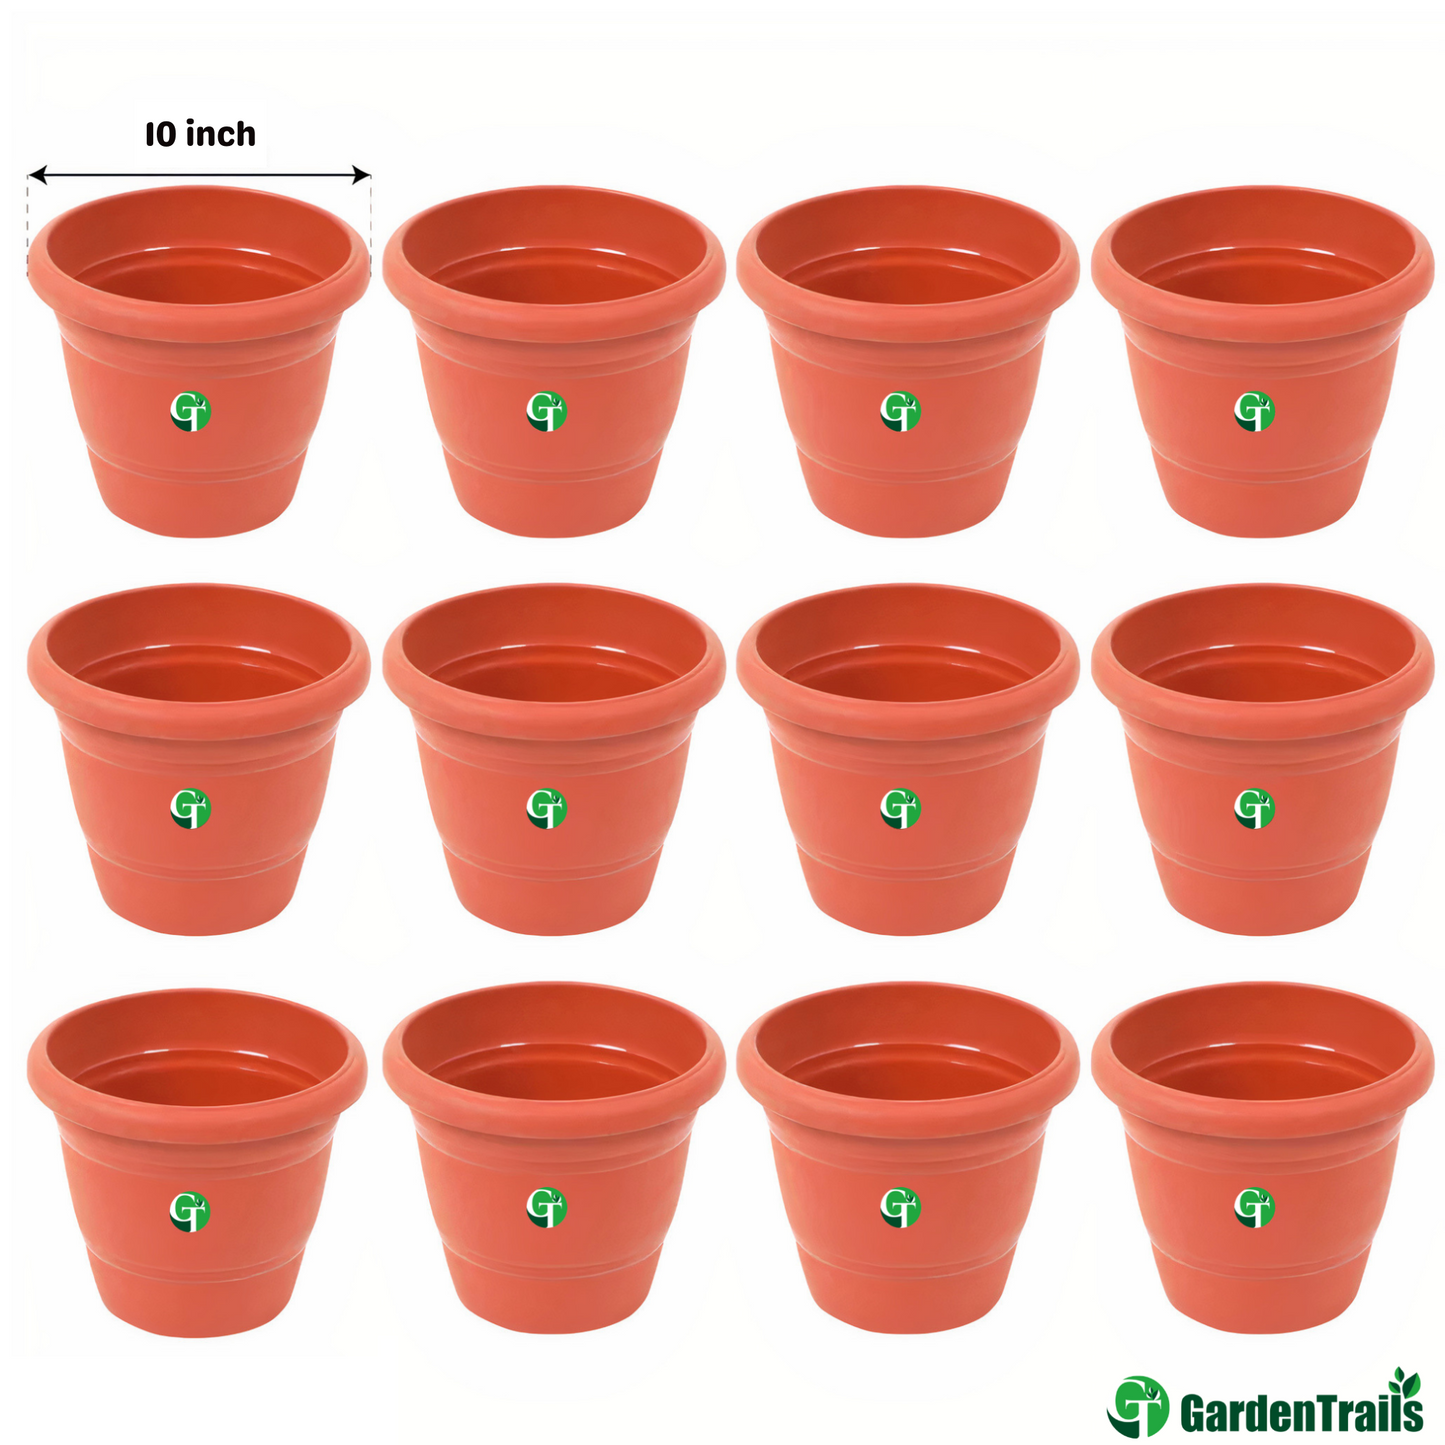 GardenTrails Premium UV Treated Plastic Round Garden Pots - 10 Inches